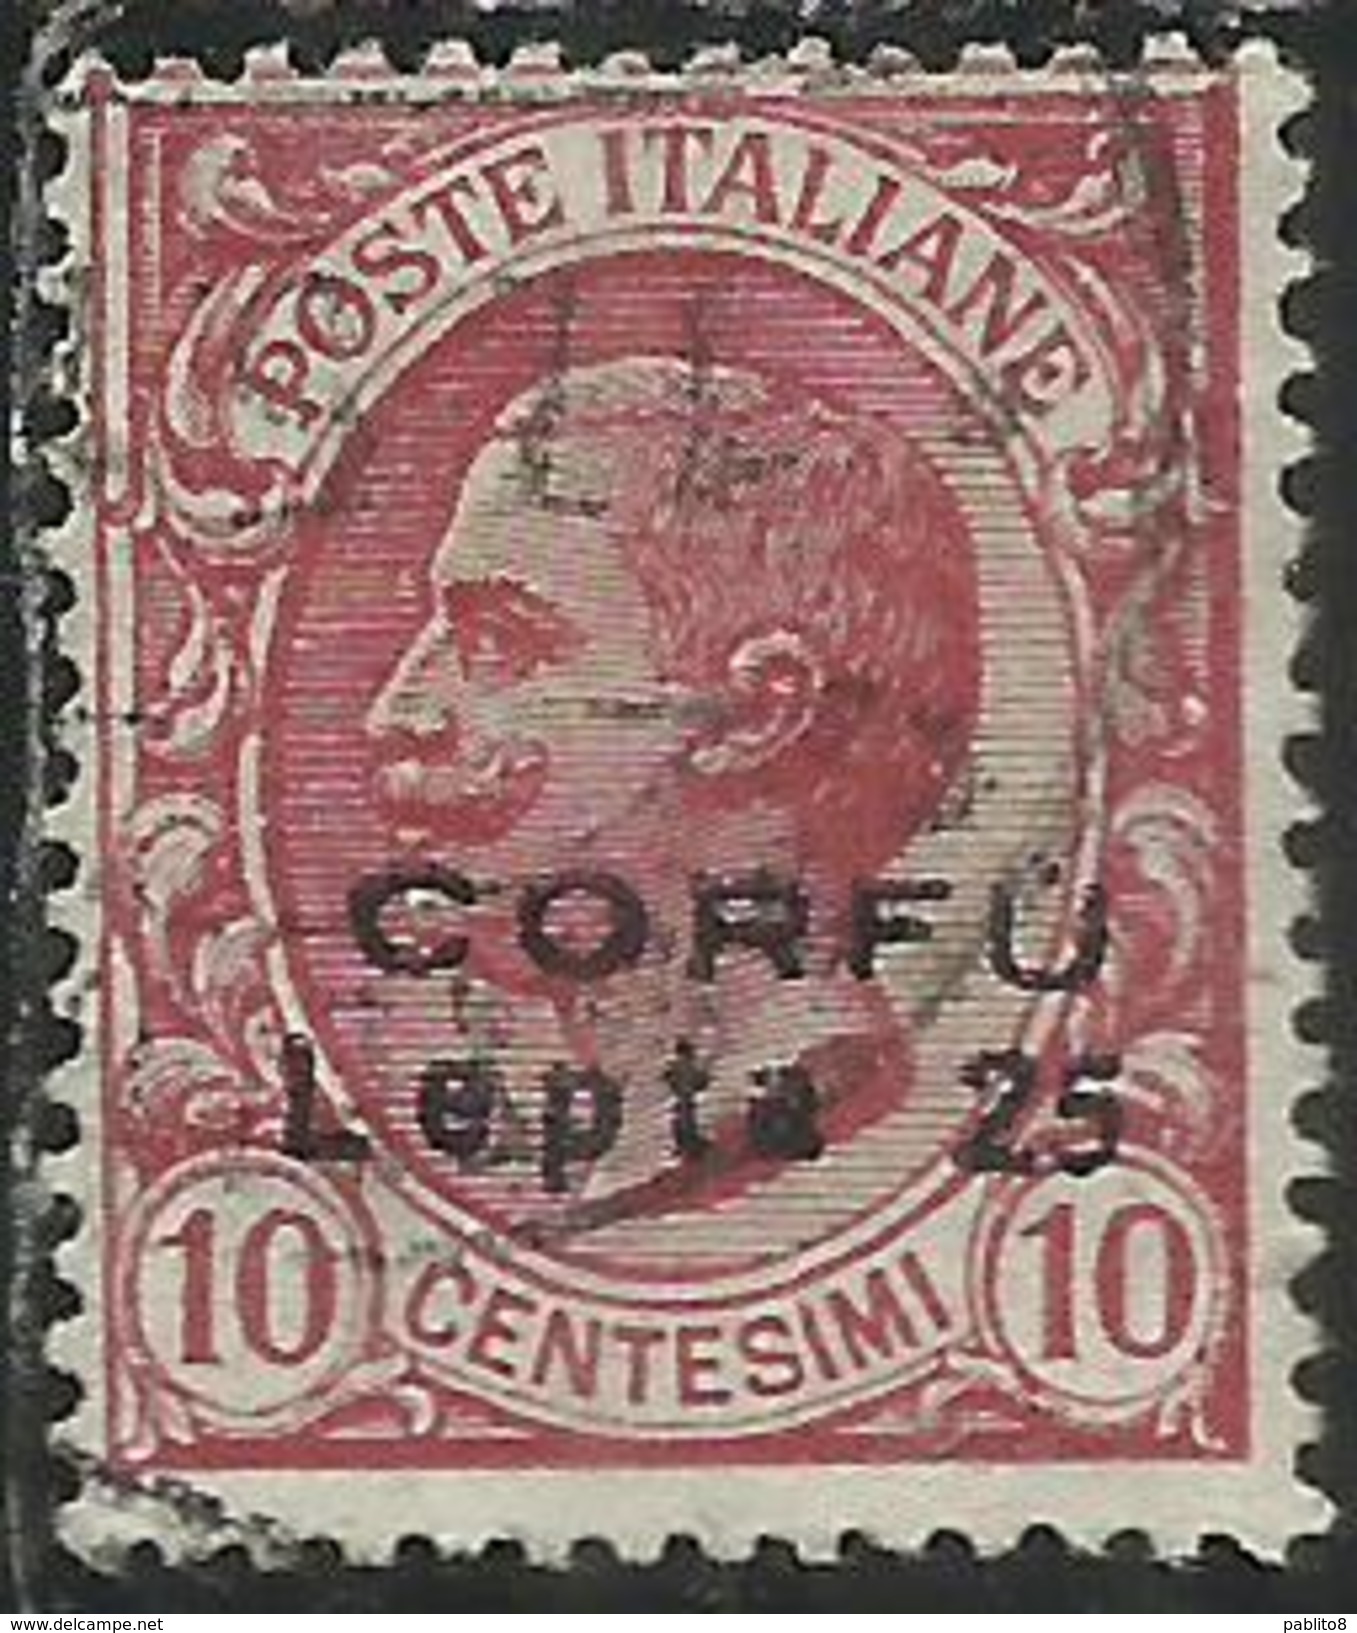 CORFU´ 1923 SOPRASTAMPATO D´ITALIA ITALY OVERPRINTED SURCHARGE 25 LEPTA SU 10 CENT. USED - Korfu